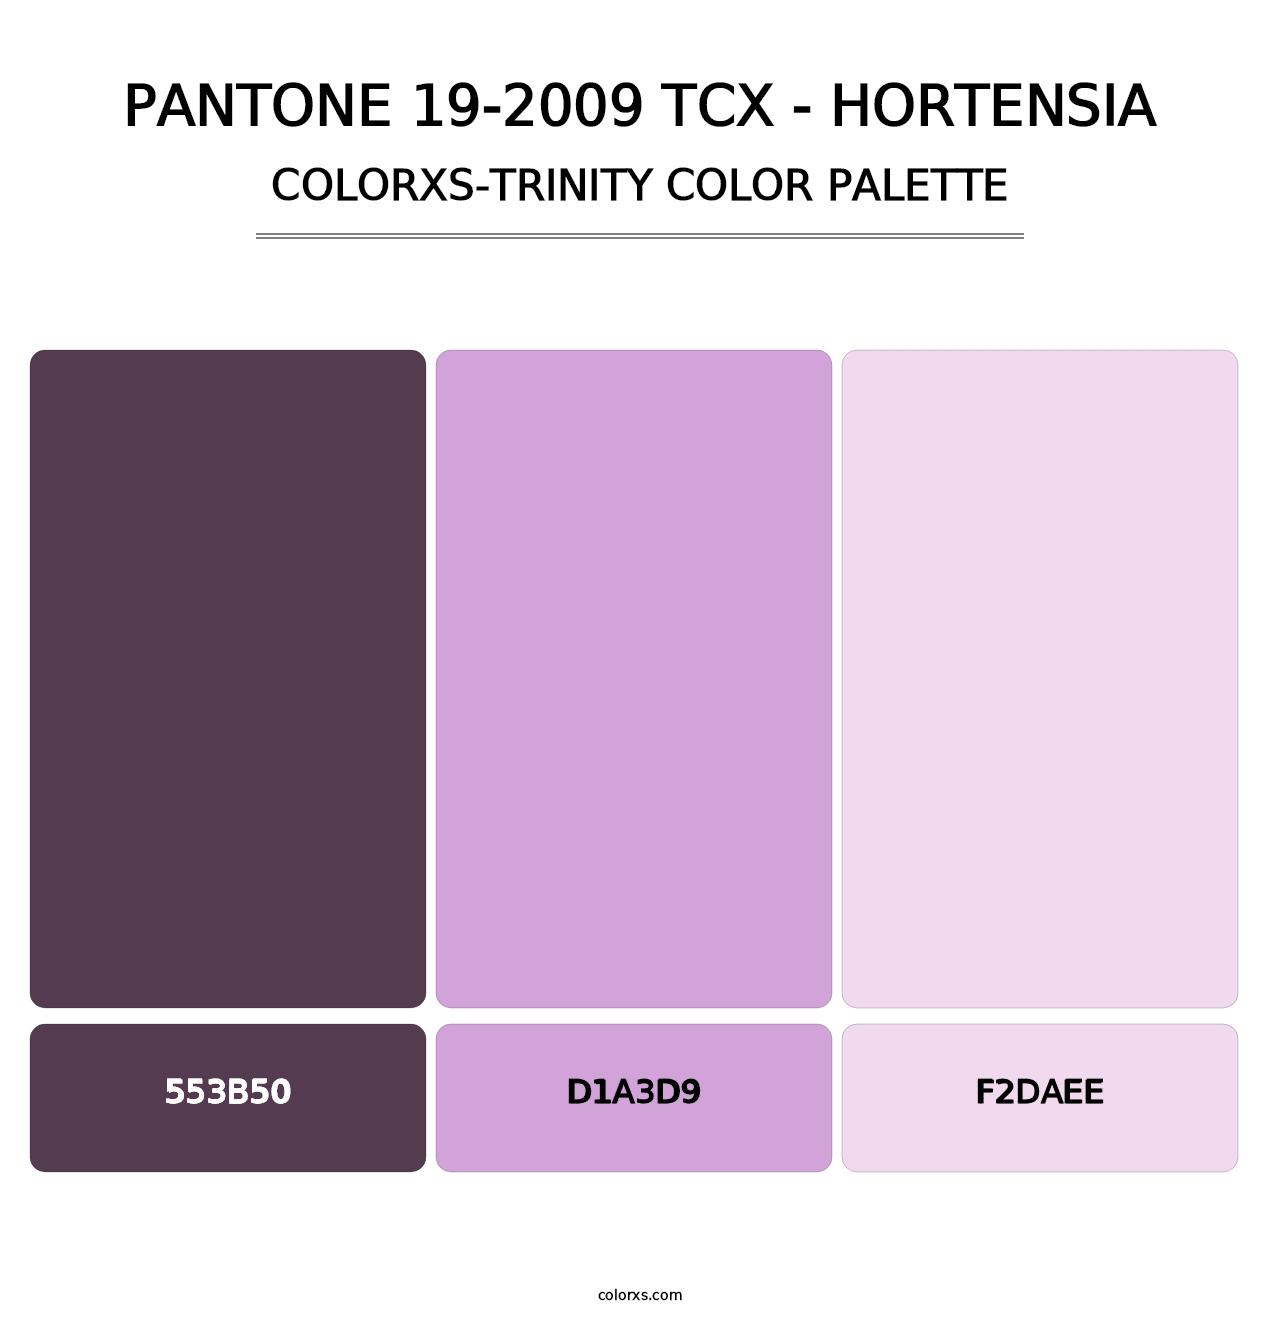 PANTONE 19-2009 TCX - Hortensia - Colorxs Trinity Palette